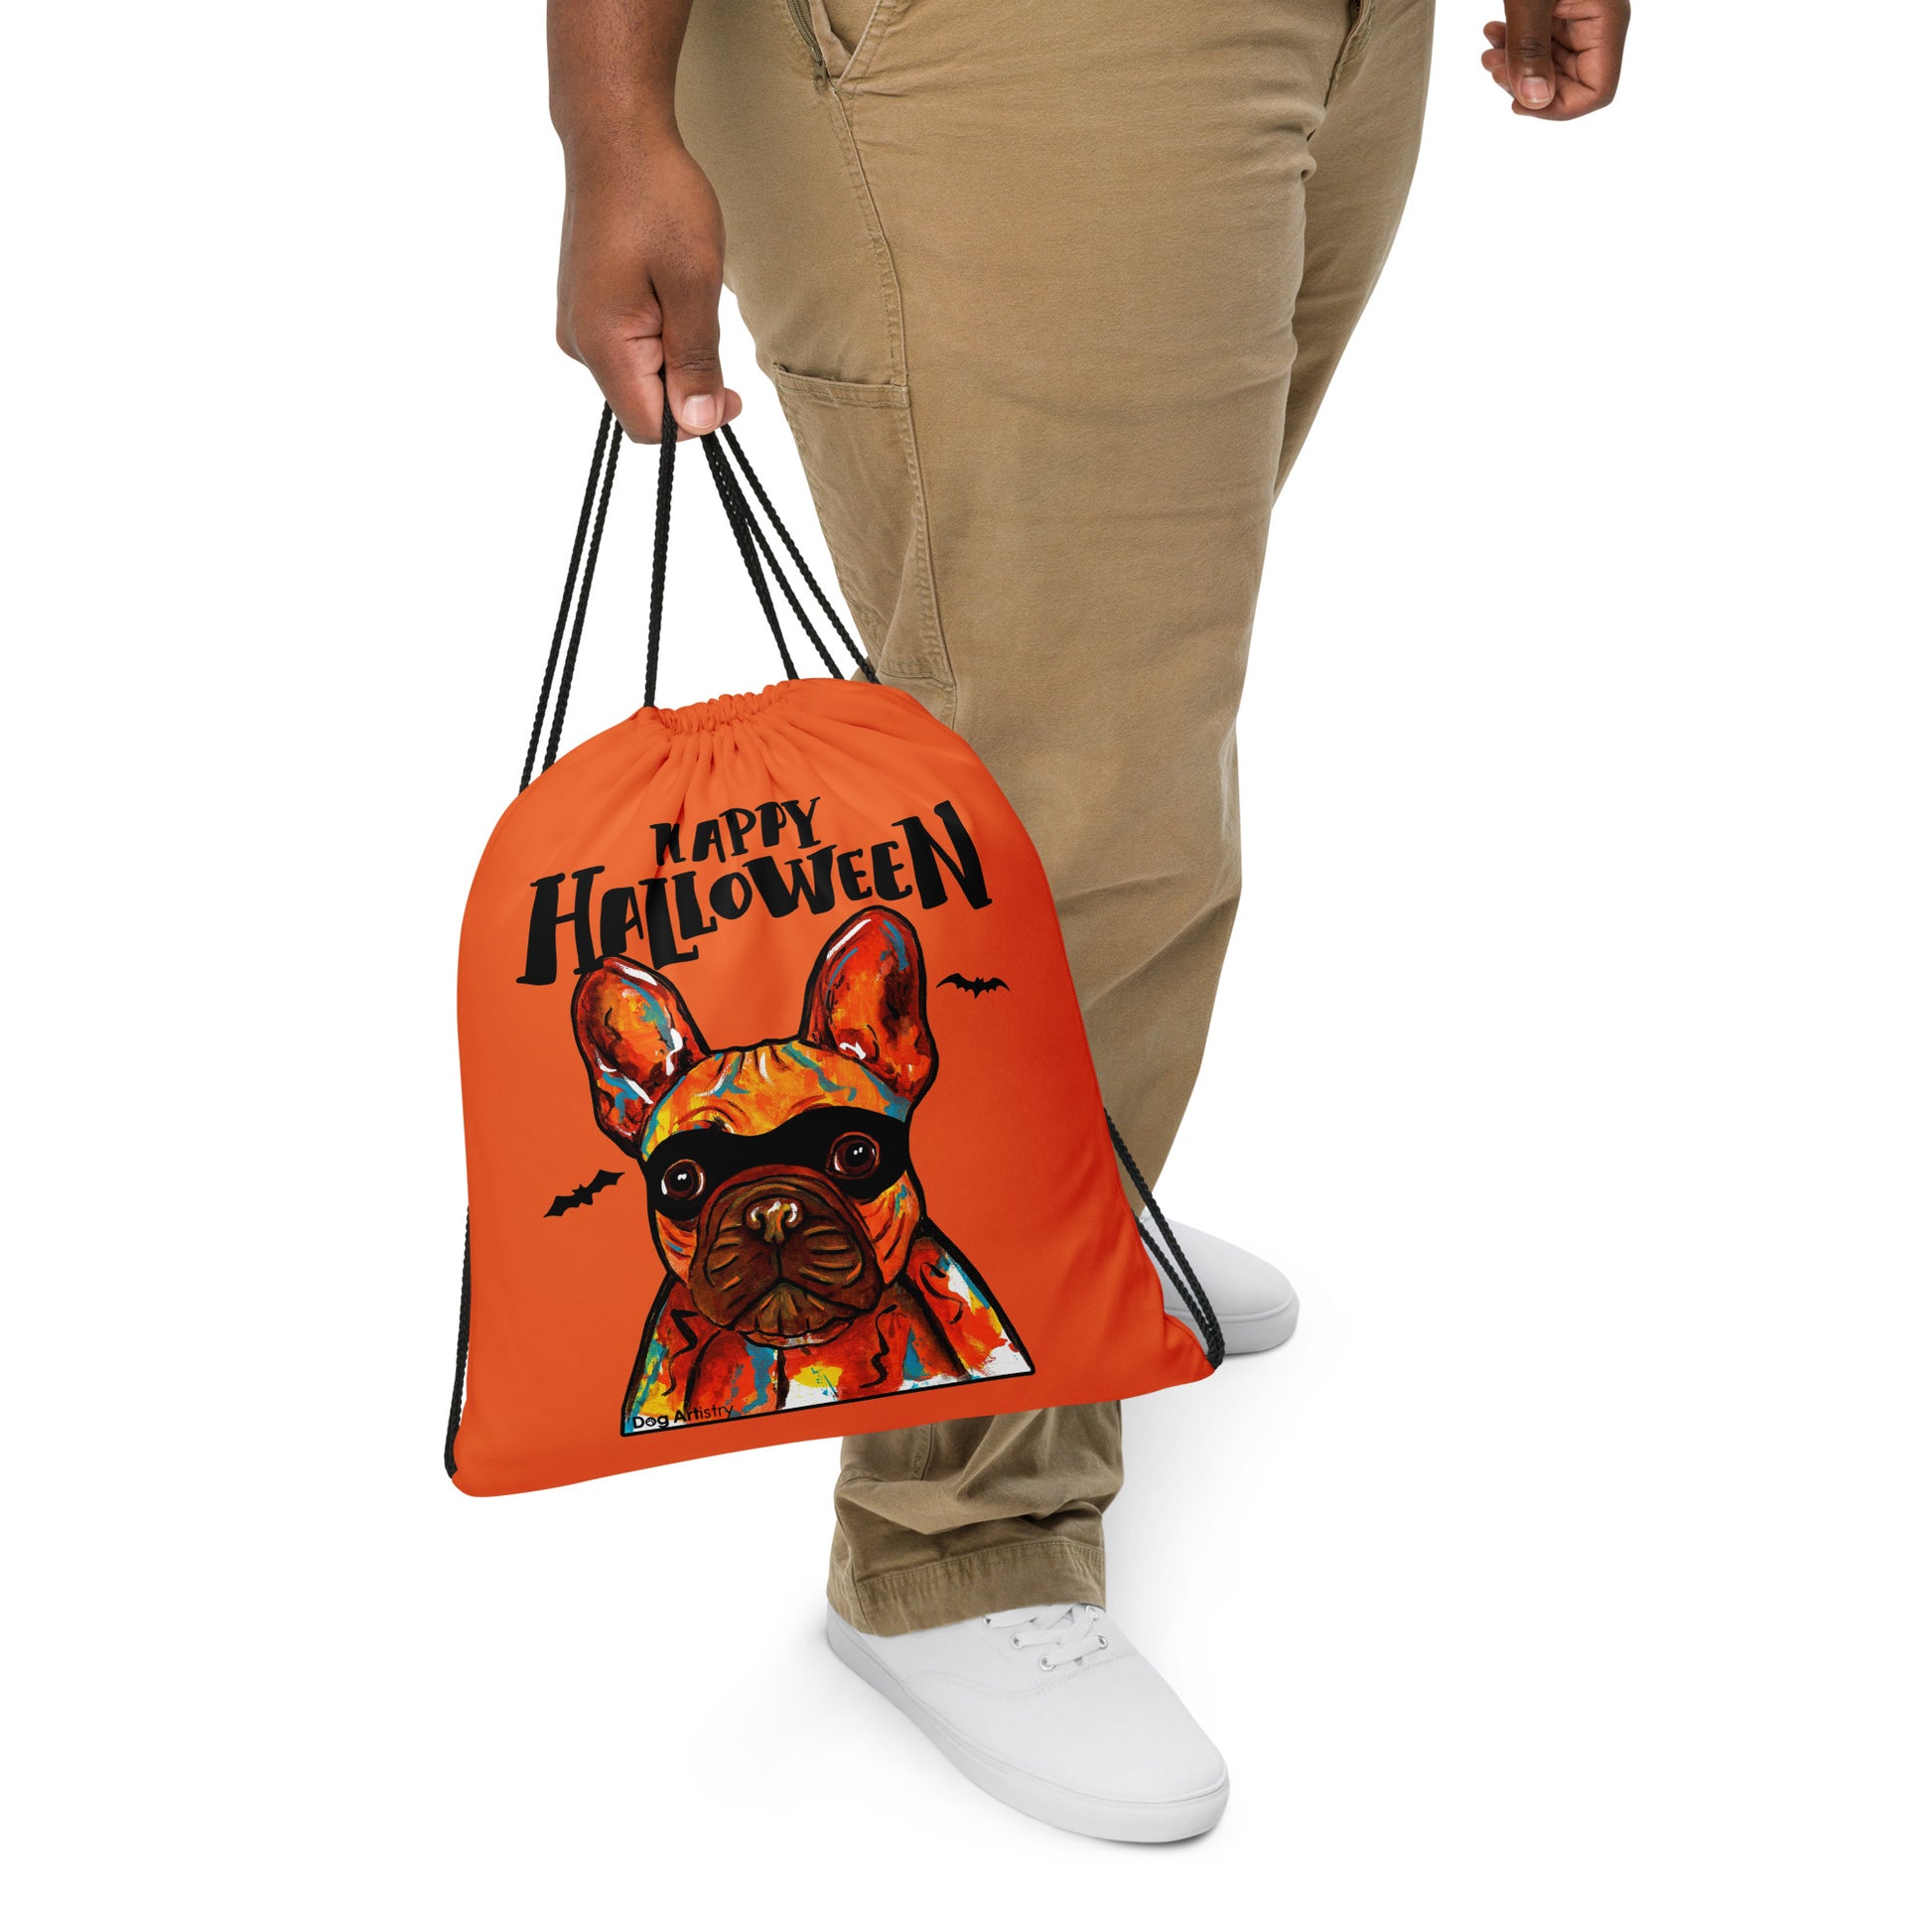 Happy Halloween French Bulldog wearing mask Orange drawstring bag by Dog Artistry Halloween candy bag. Funny dog Halloween bag.